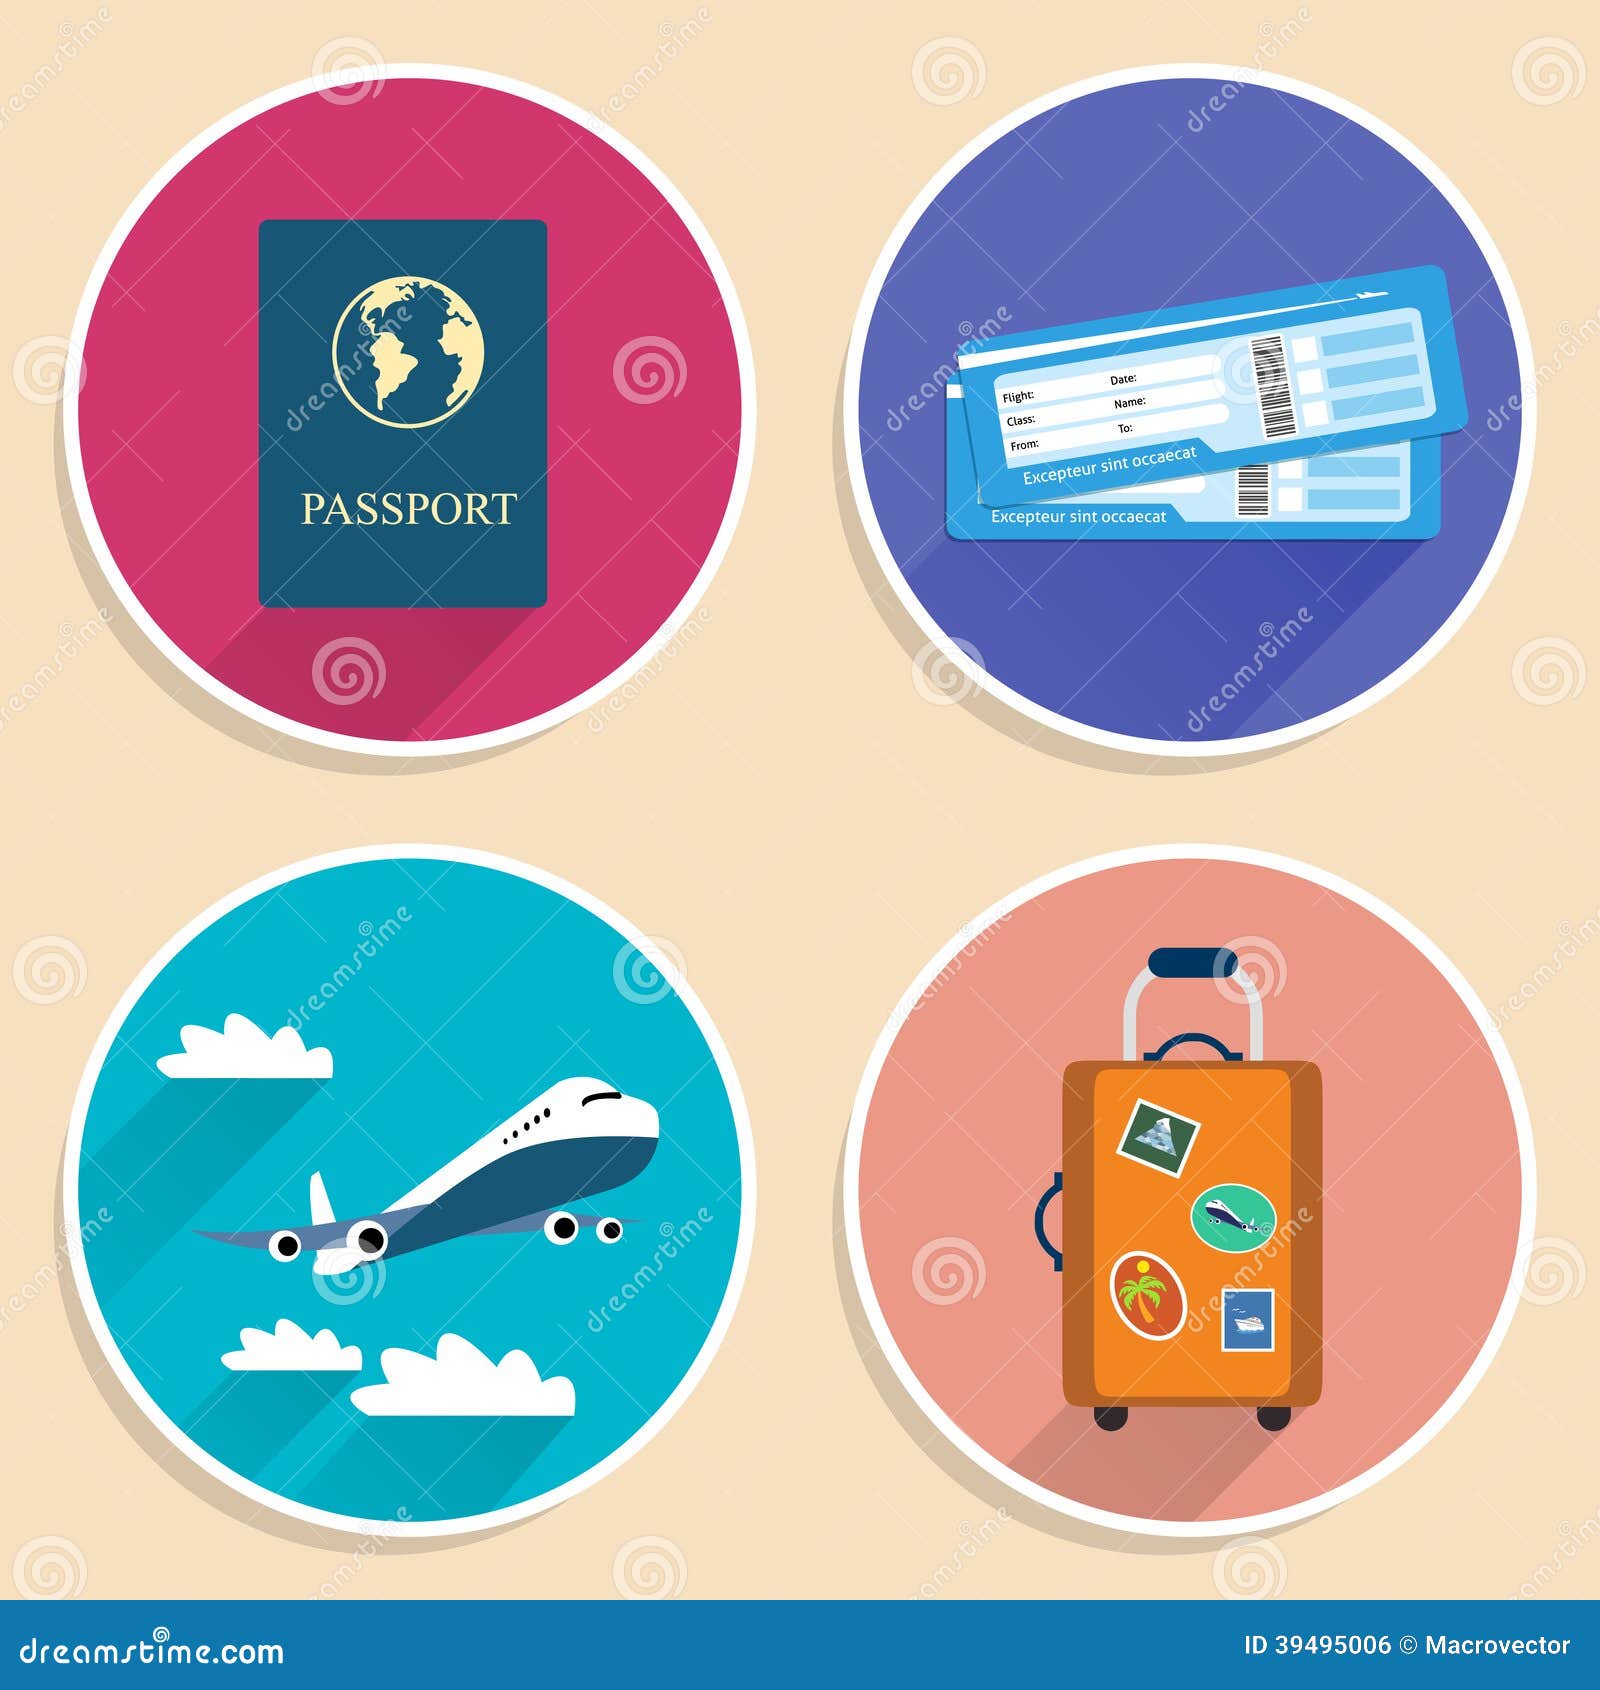 vacation travel voyage icons set